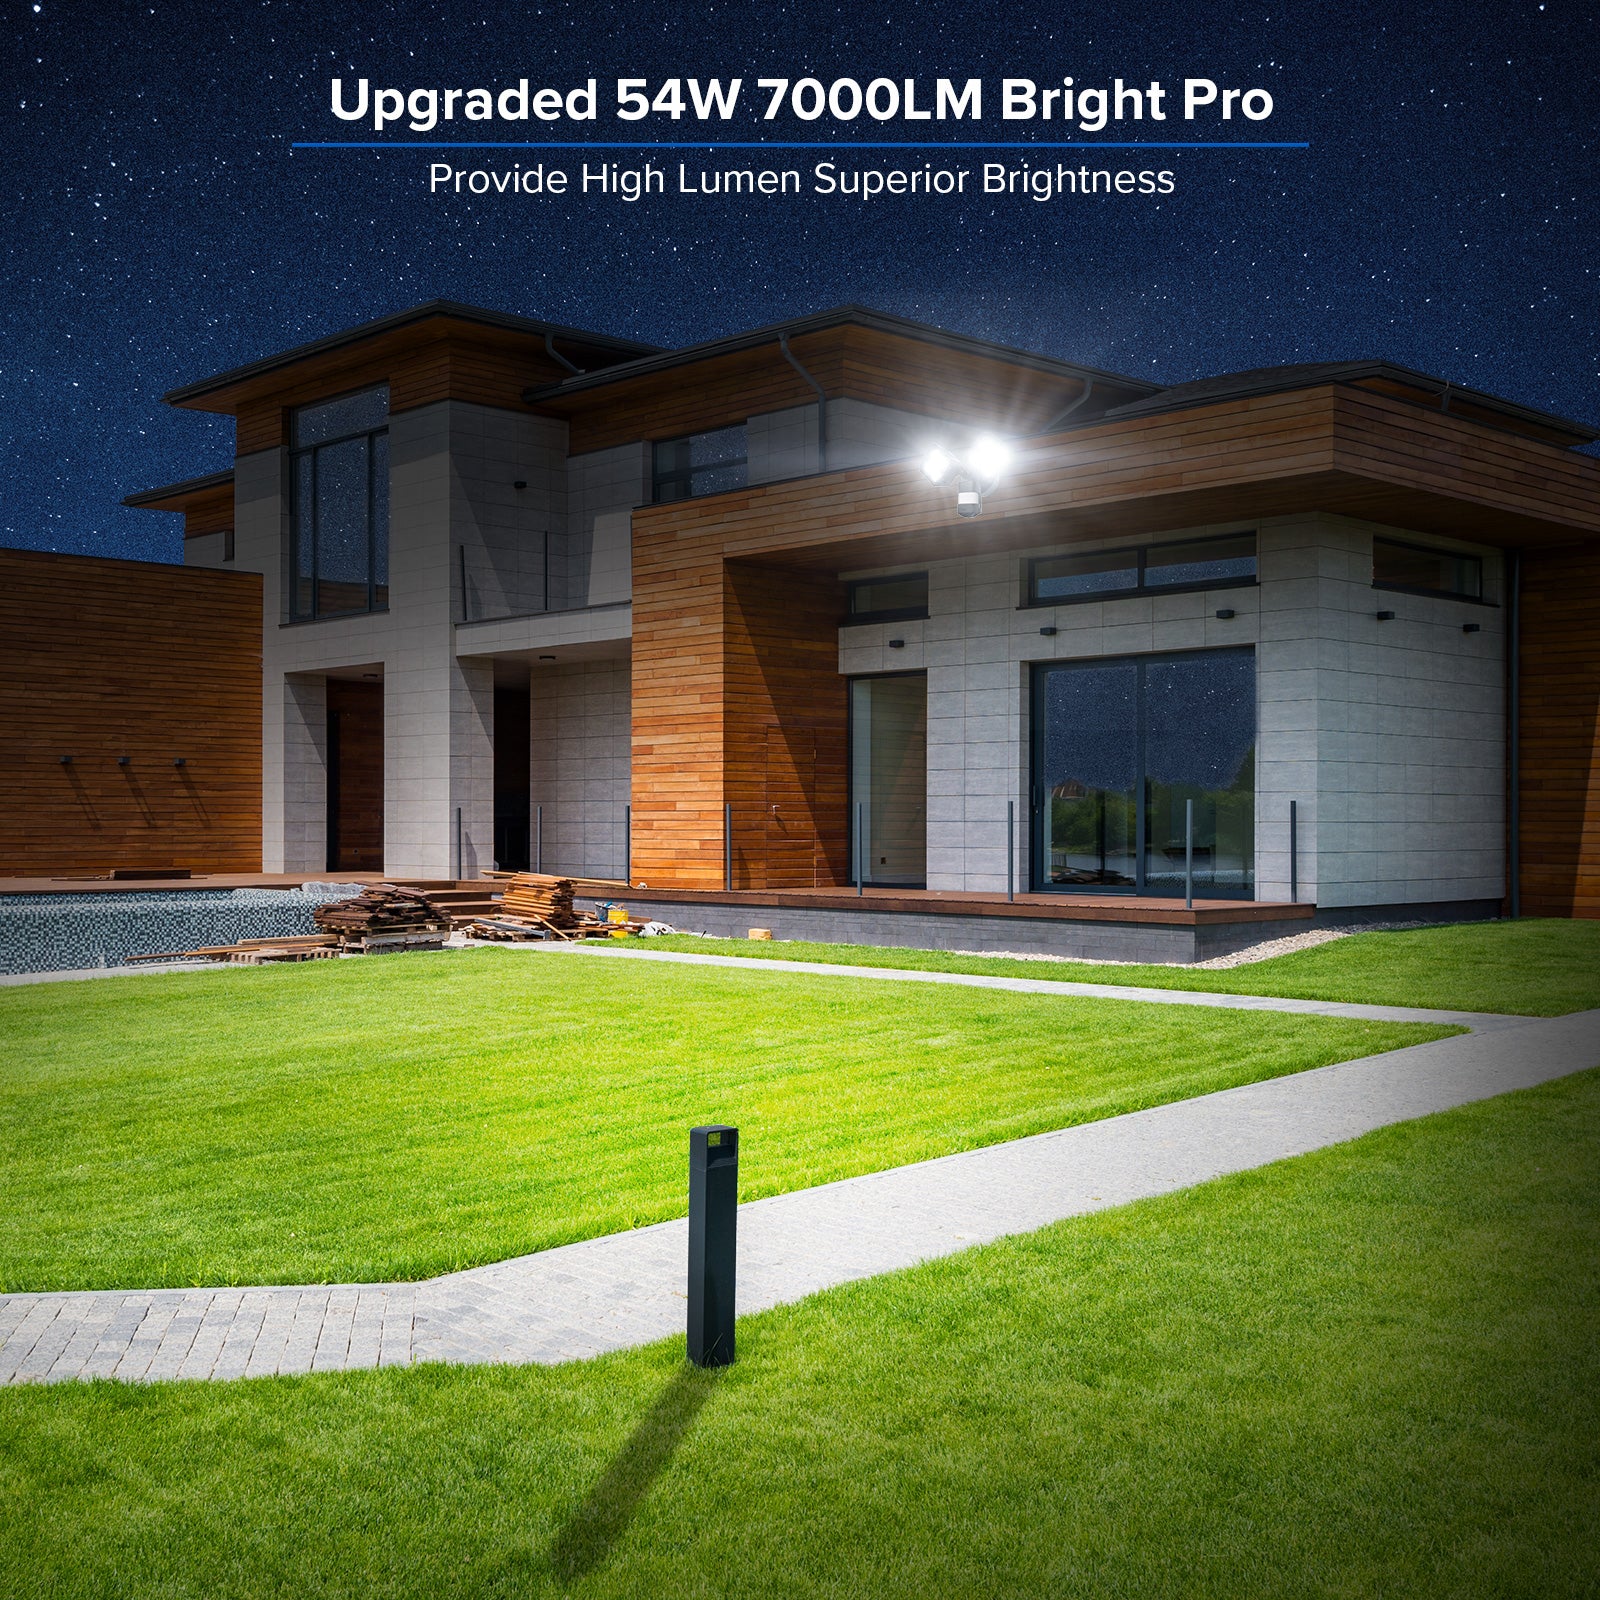 Square Upgraded 54W Led Security Light (Dusk to Dawn&Motion Sensor), 7000 lm bright pro, provide high lumen superior brightness